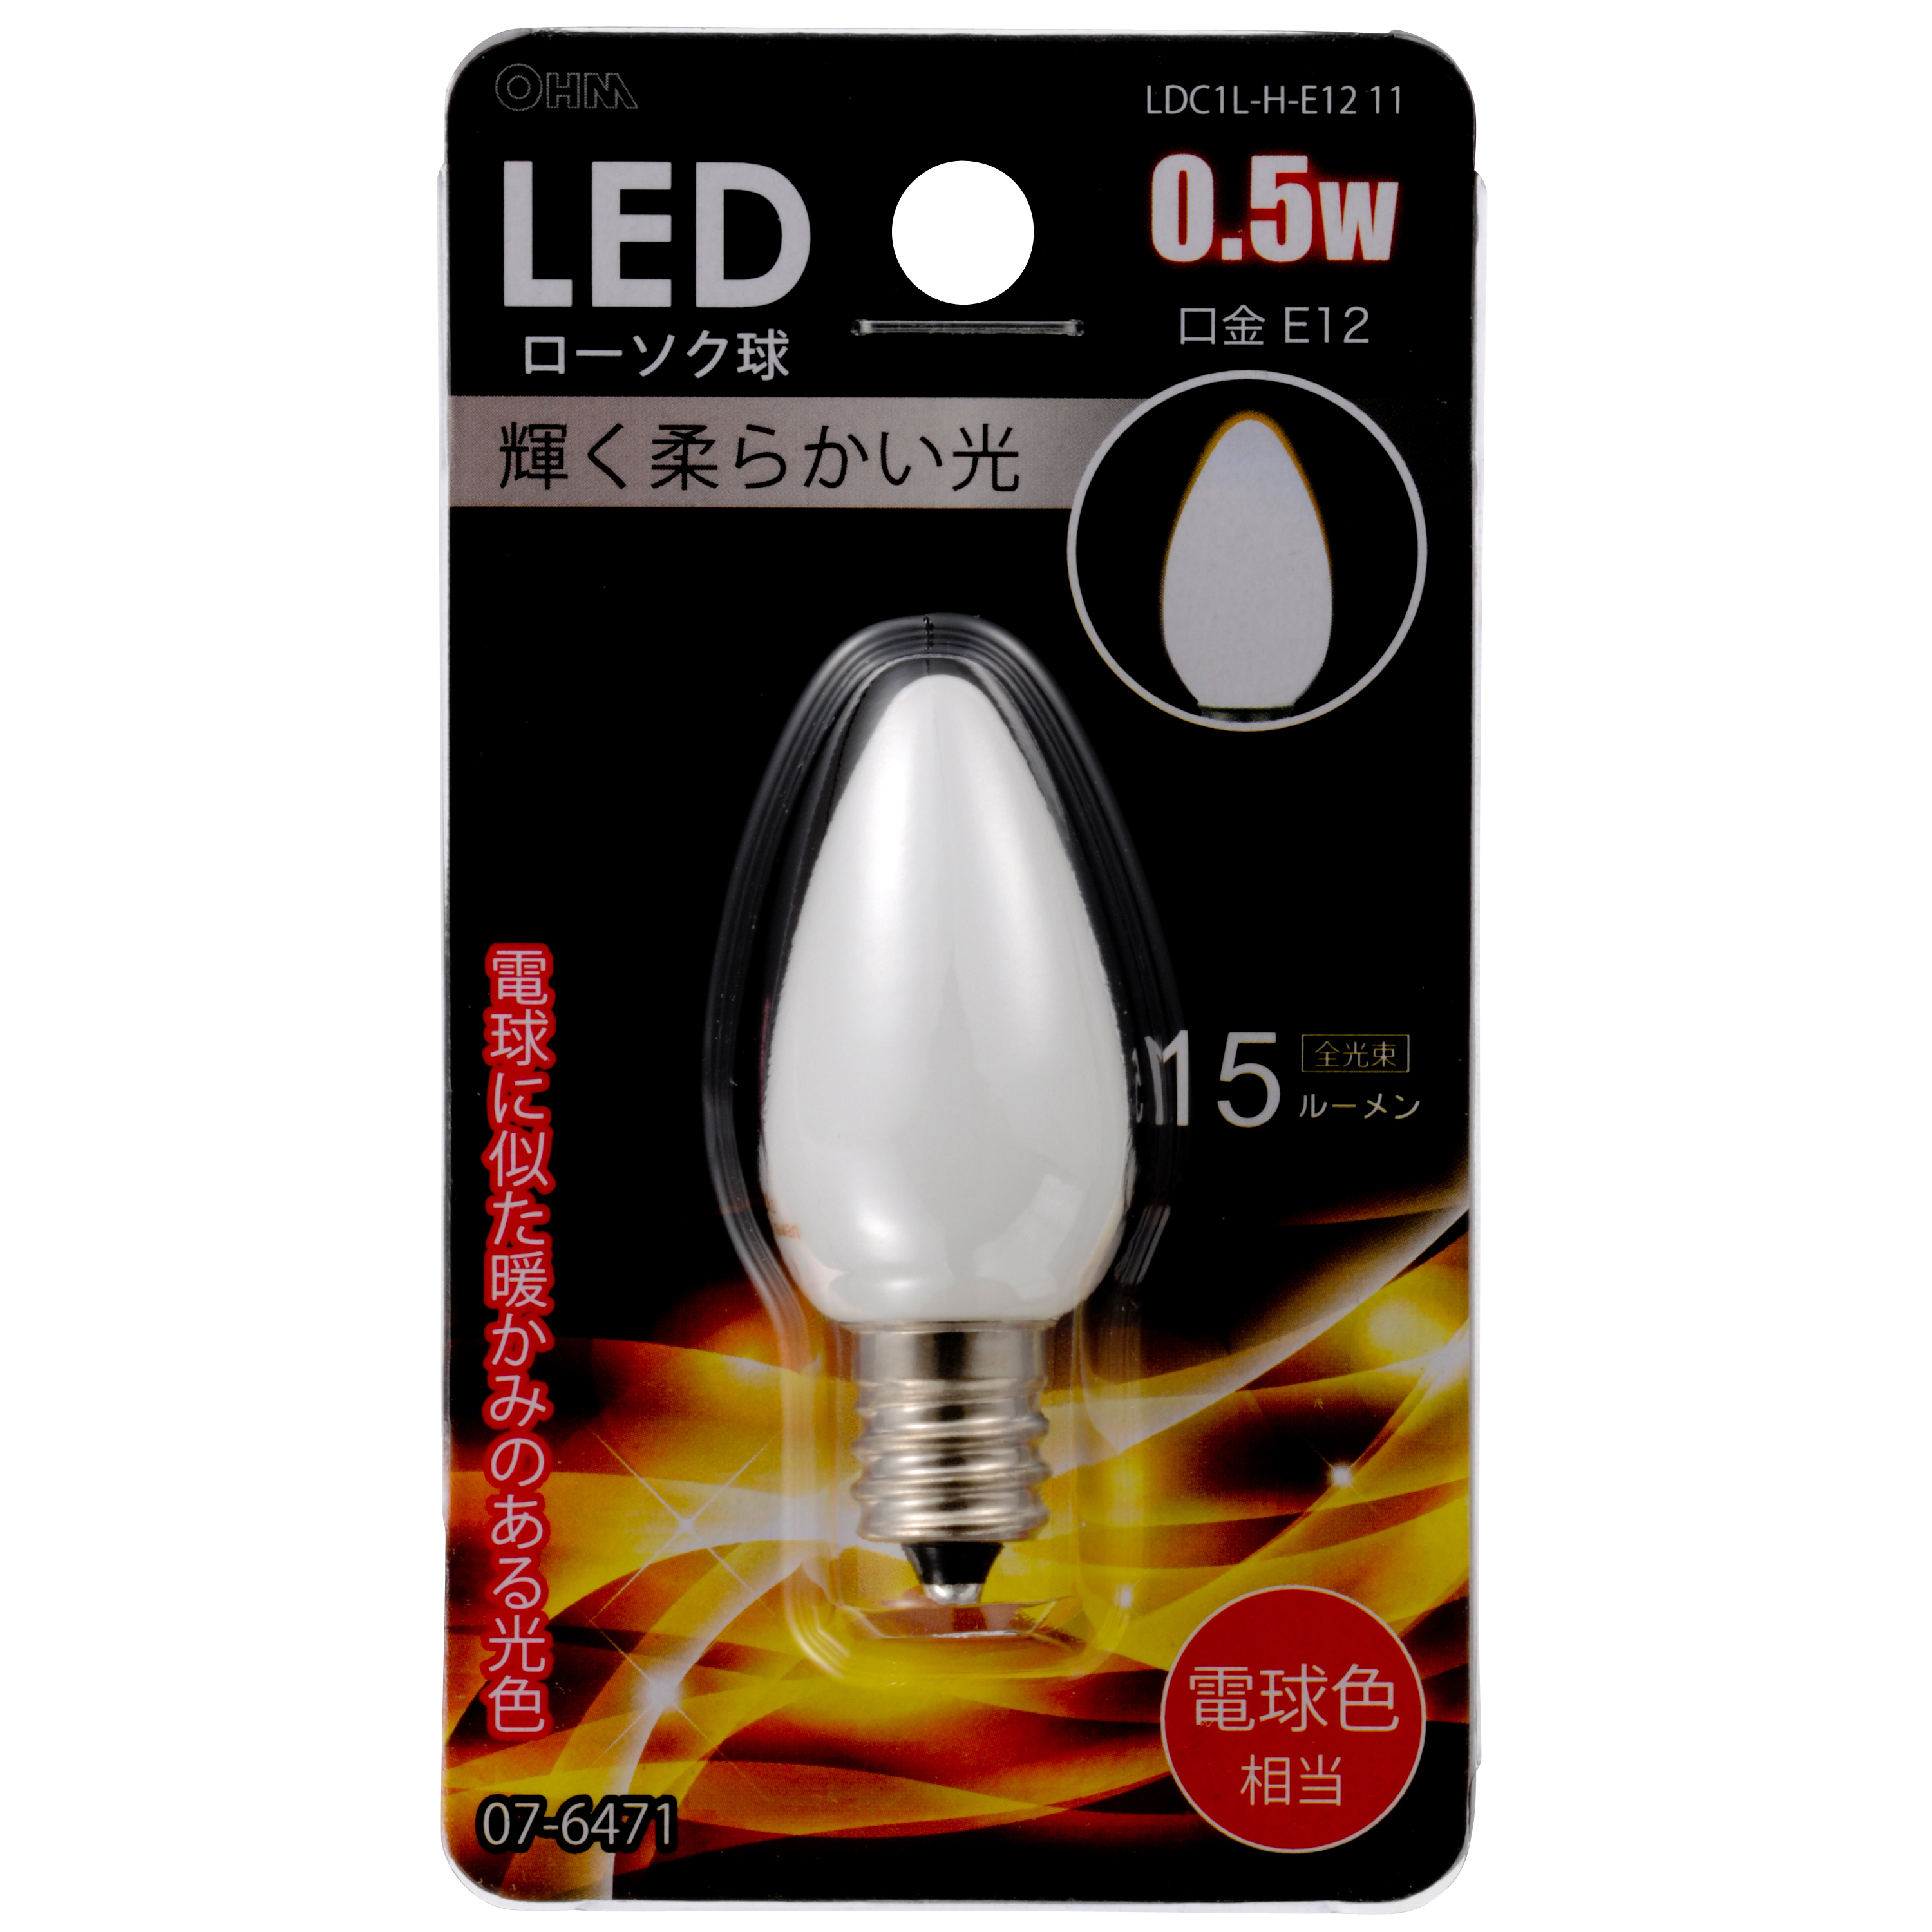 LEDローソク球装飾用 C7/E12/0.5W/15lm/電球色 [品番]07-6471｜株式 